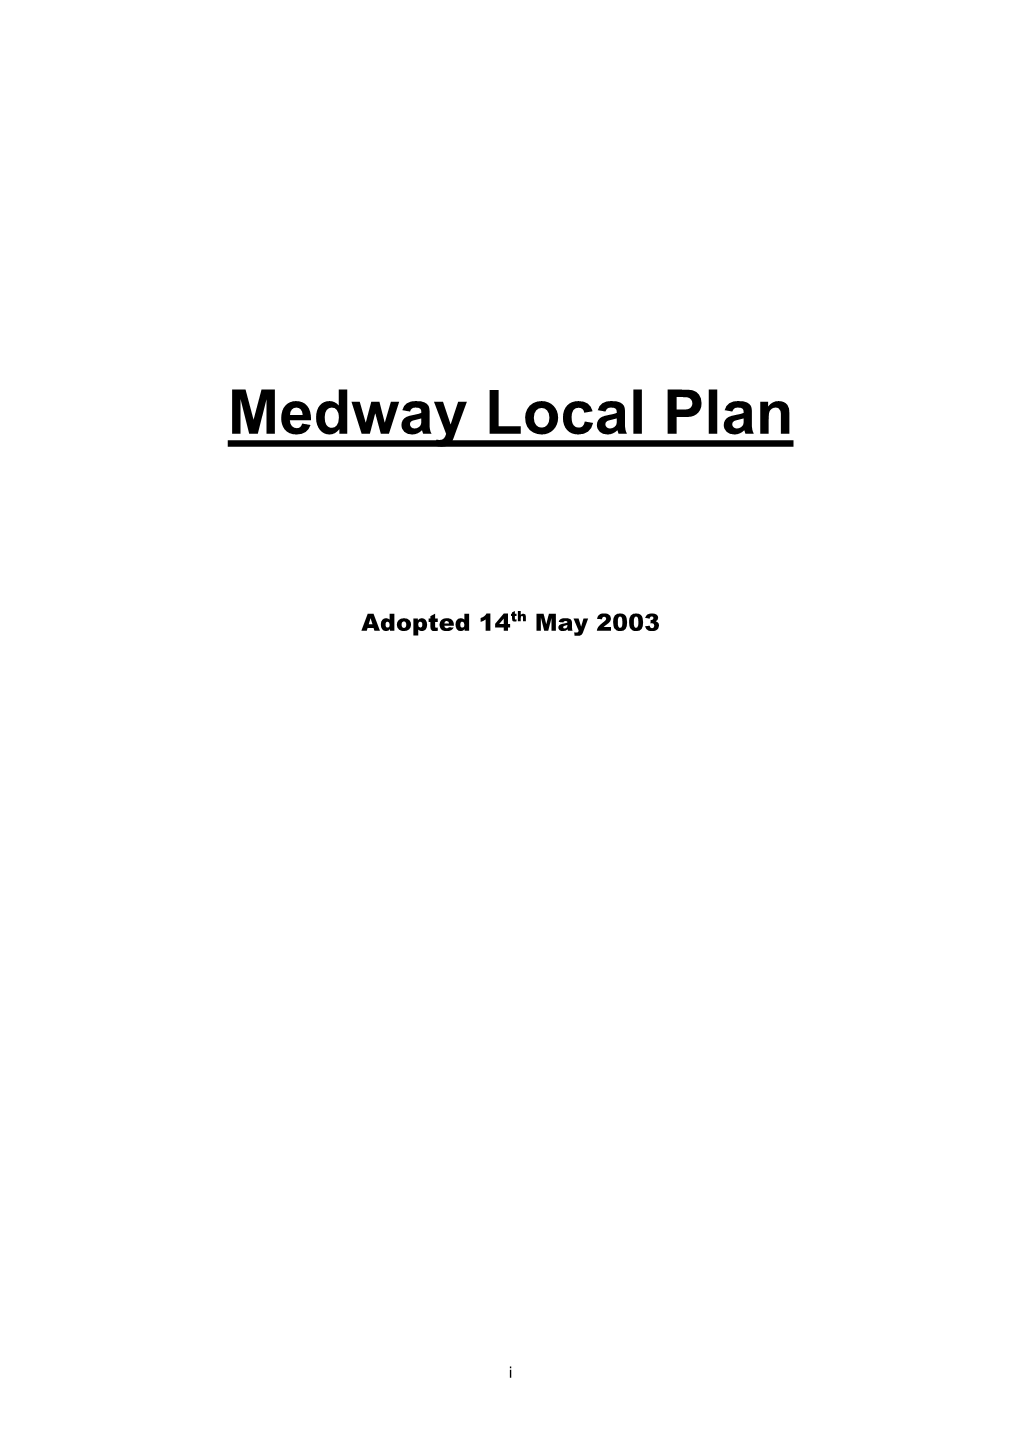 Download Medway Local Plan 2003